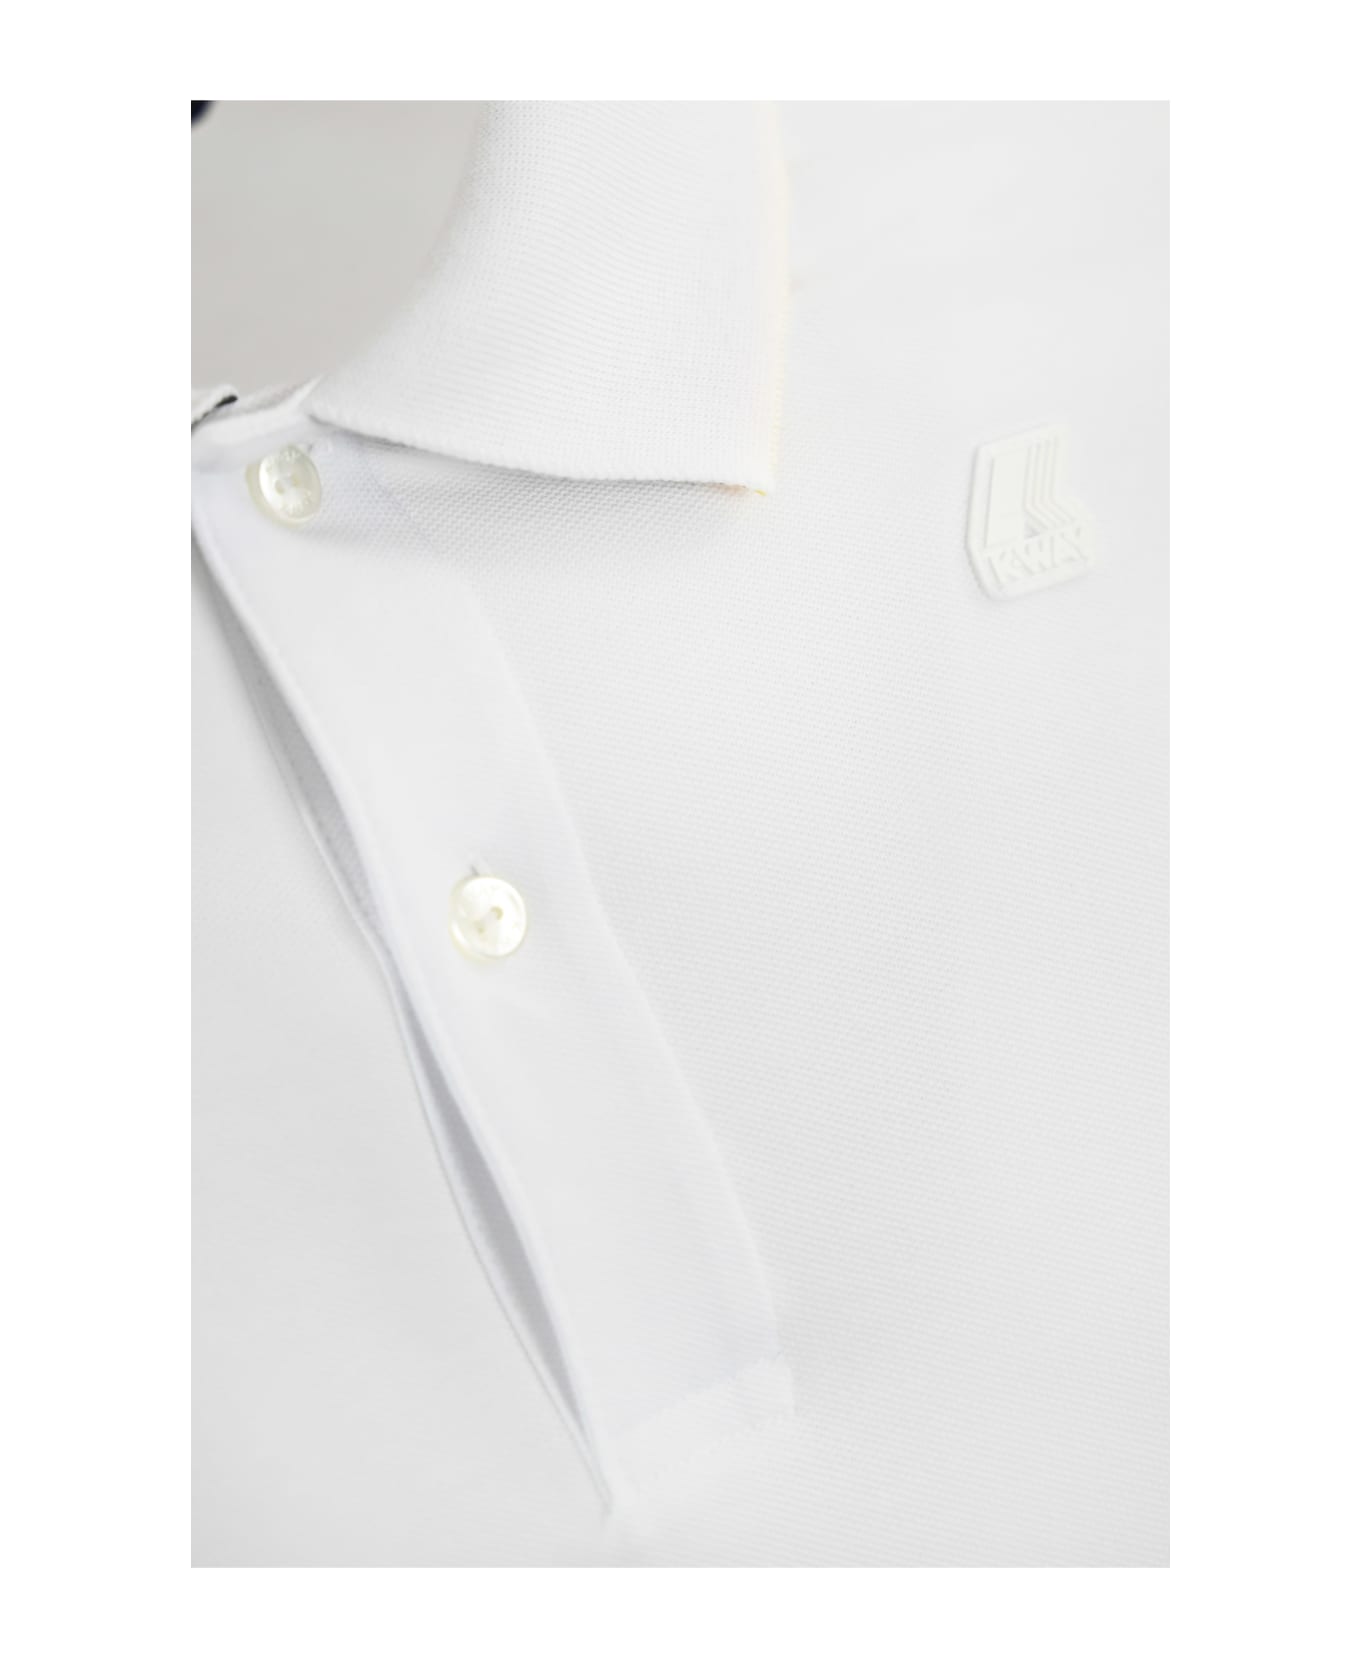 K-Way Vincent Polo Shirt - White ポロシャツ